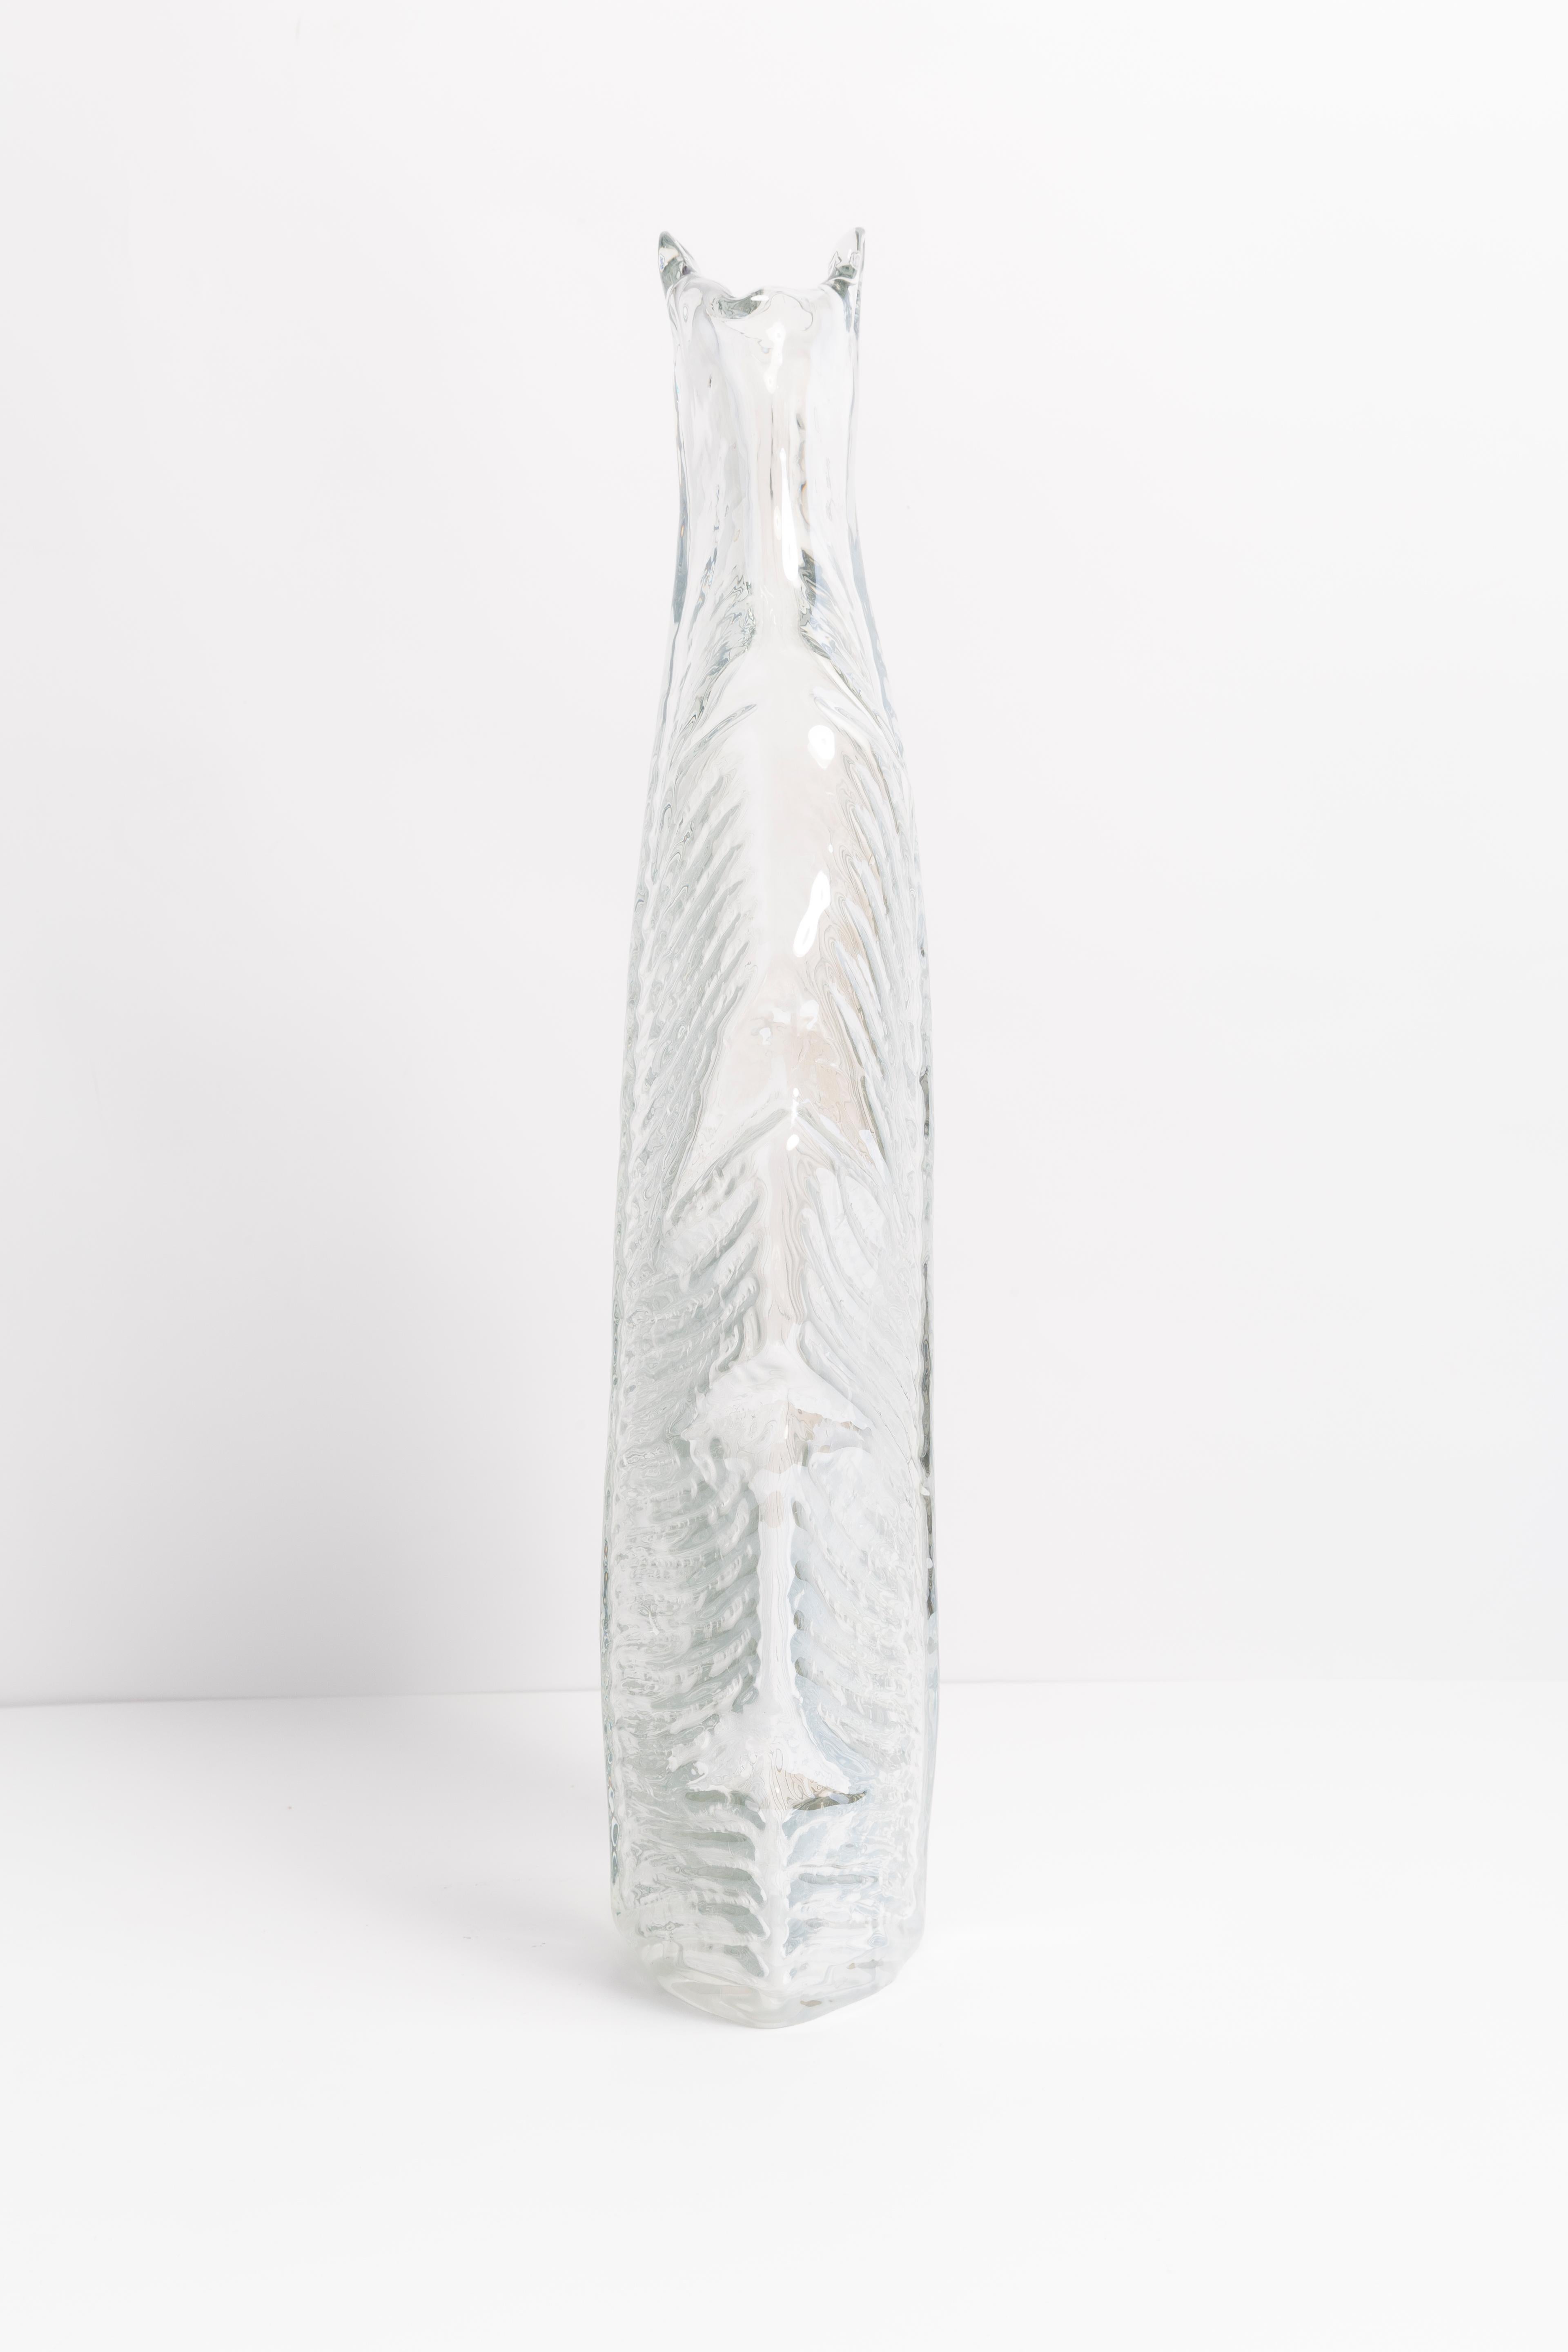 Mid Century Big Leaf Transparent Vase, Italy, 1960s In Excellent Condition For Sale In 05-080 Hornowek, PL